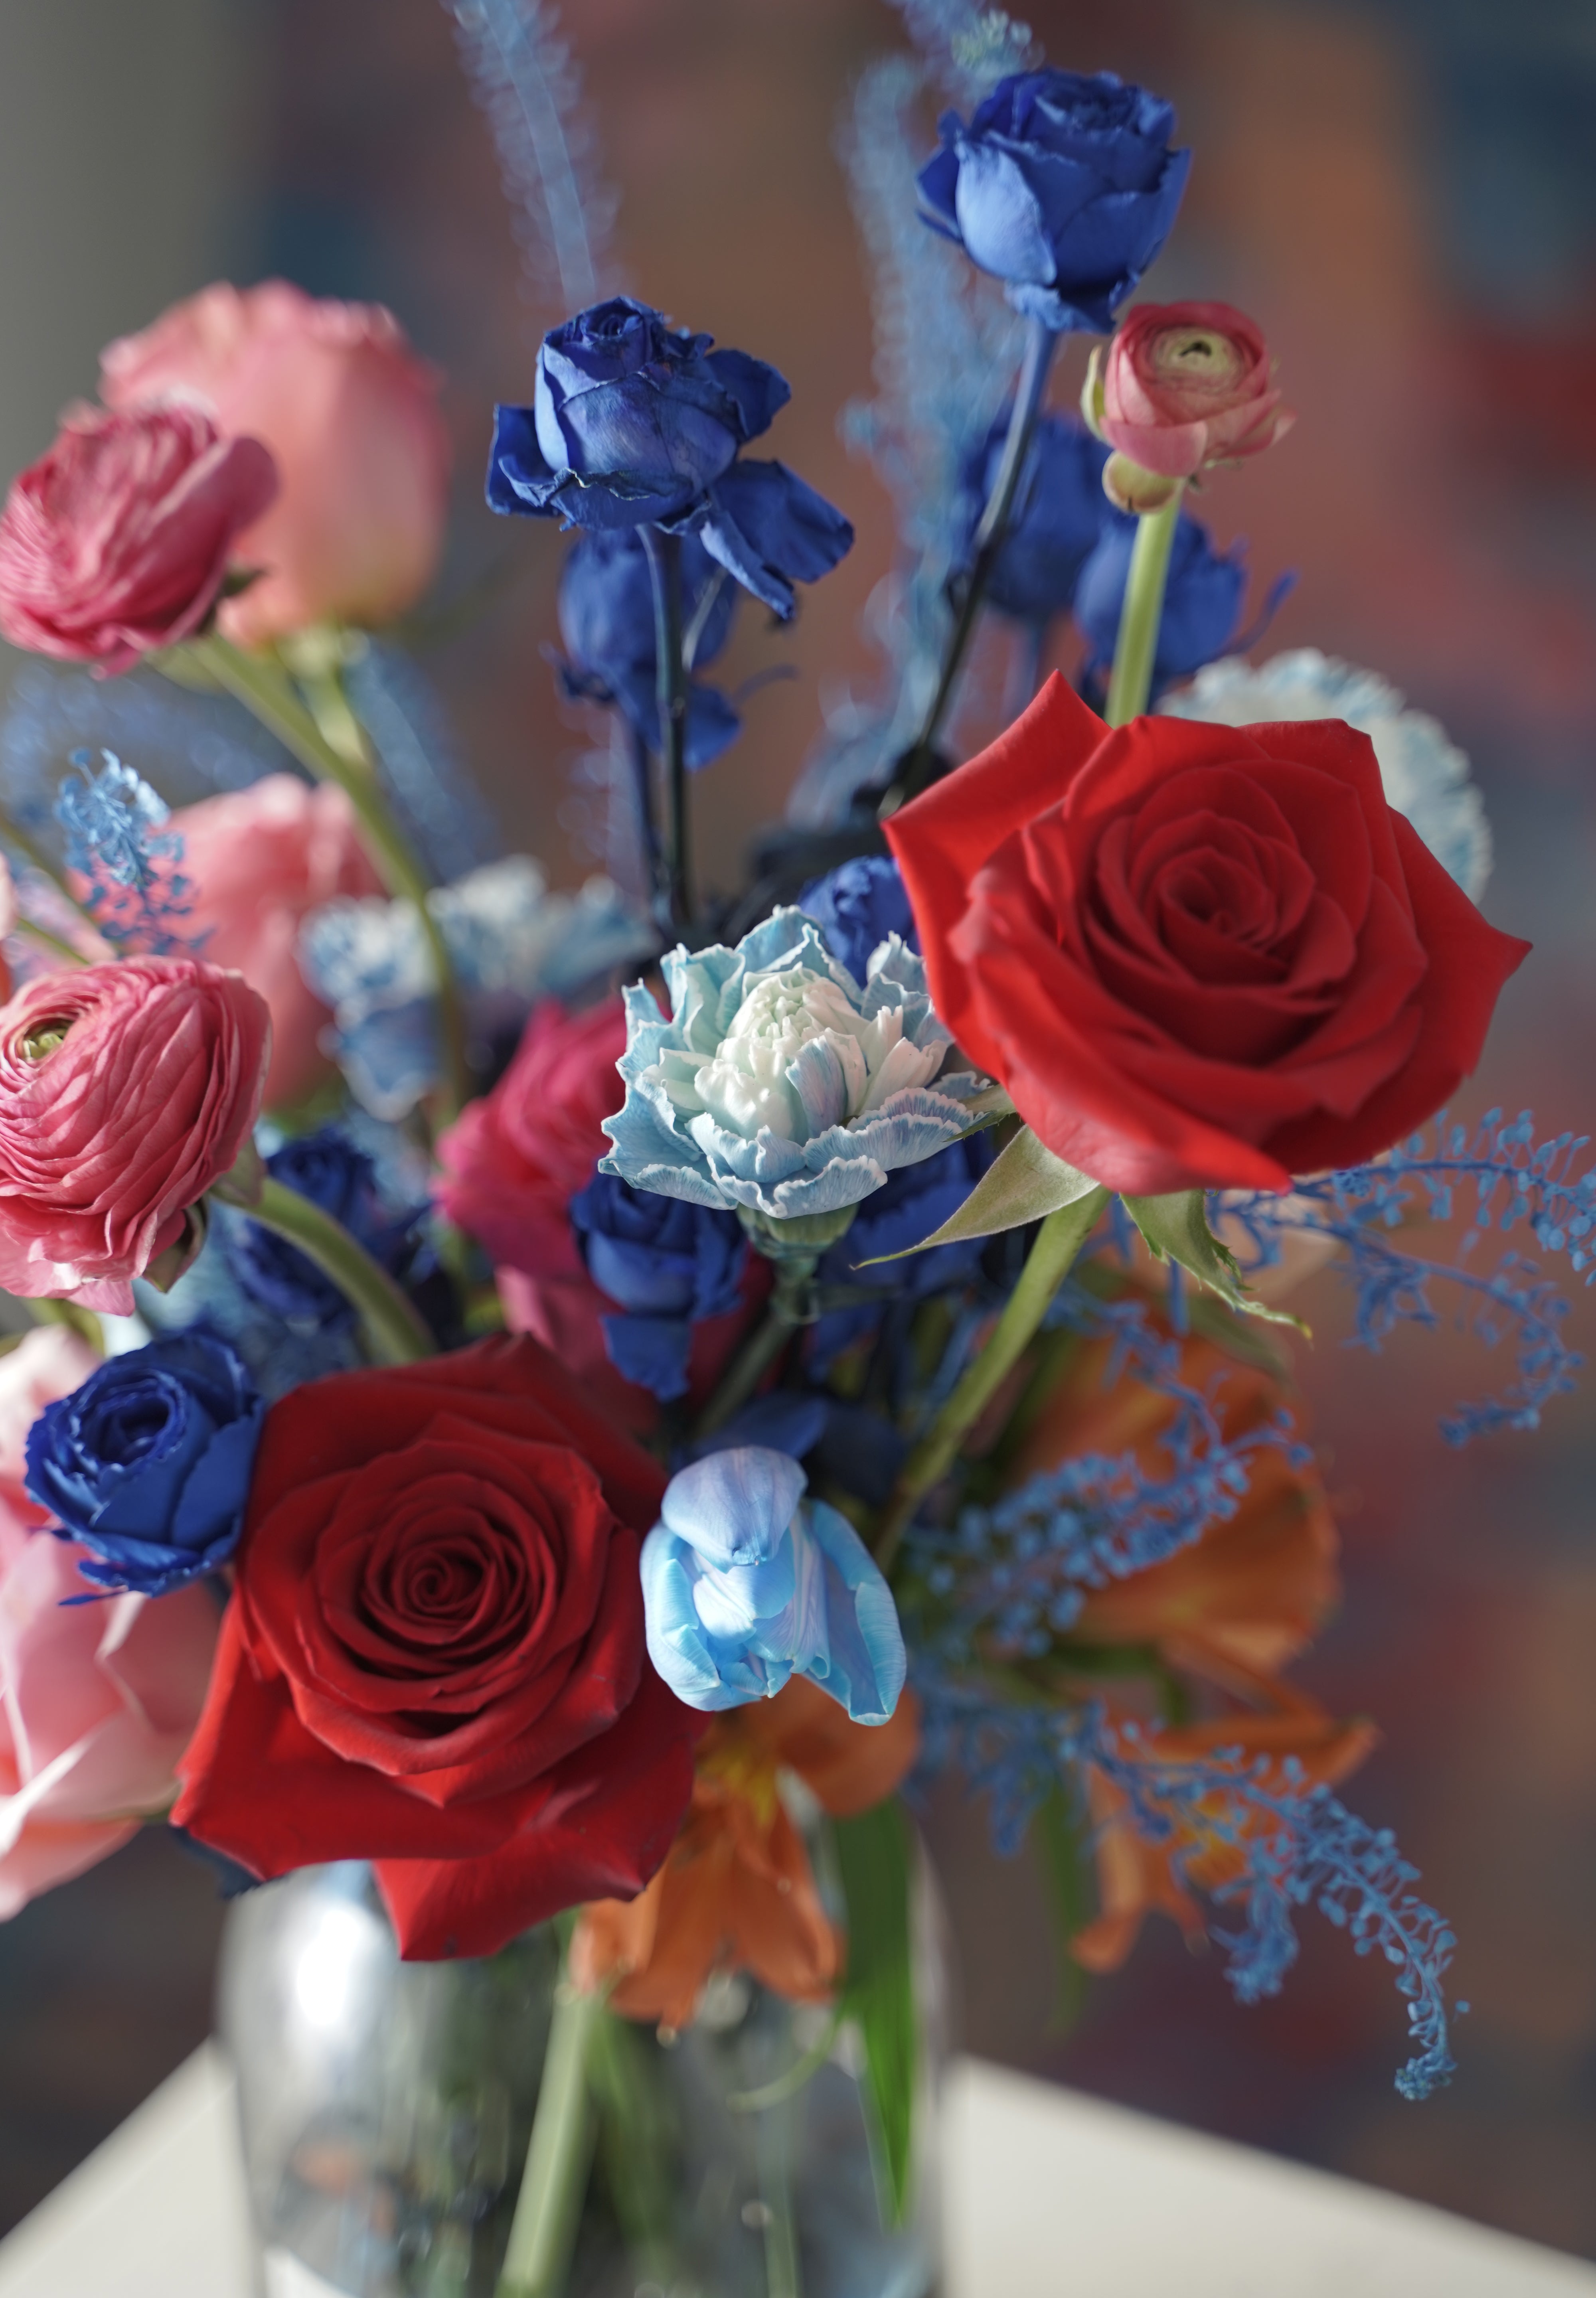 Aries Birthday Flowers Arrangement with Vase - Zodiac Collection